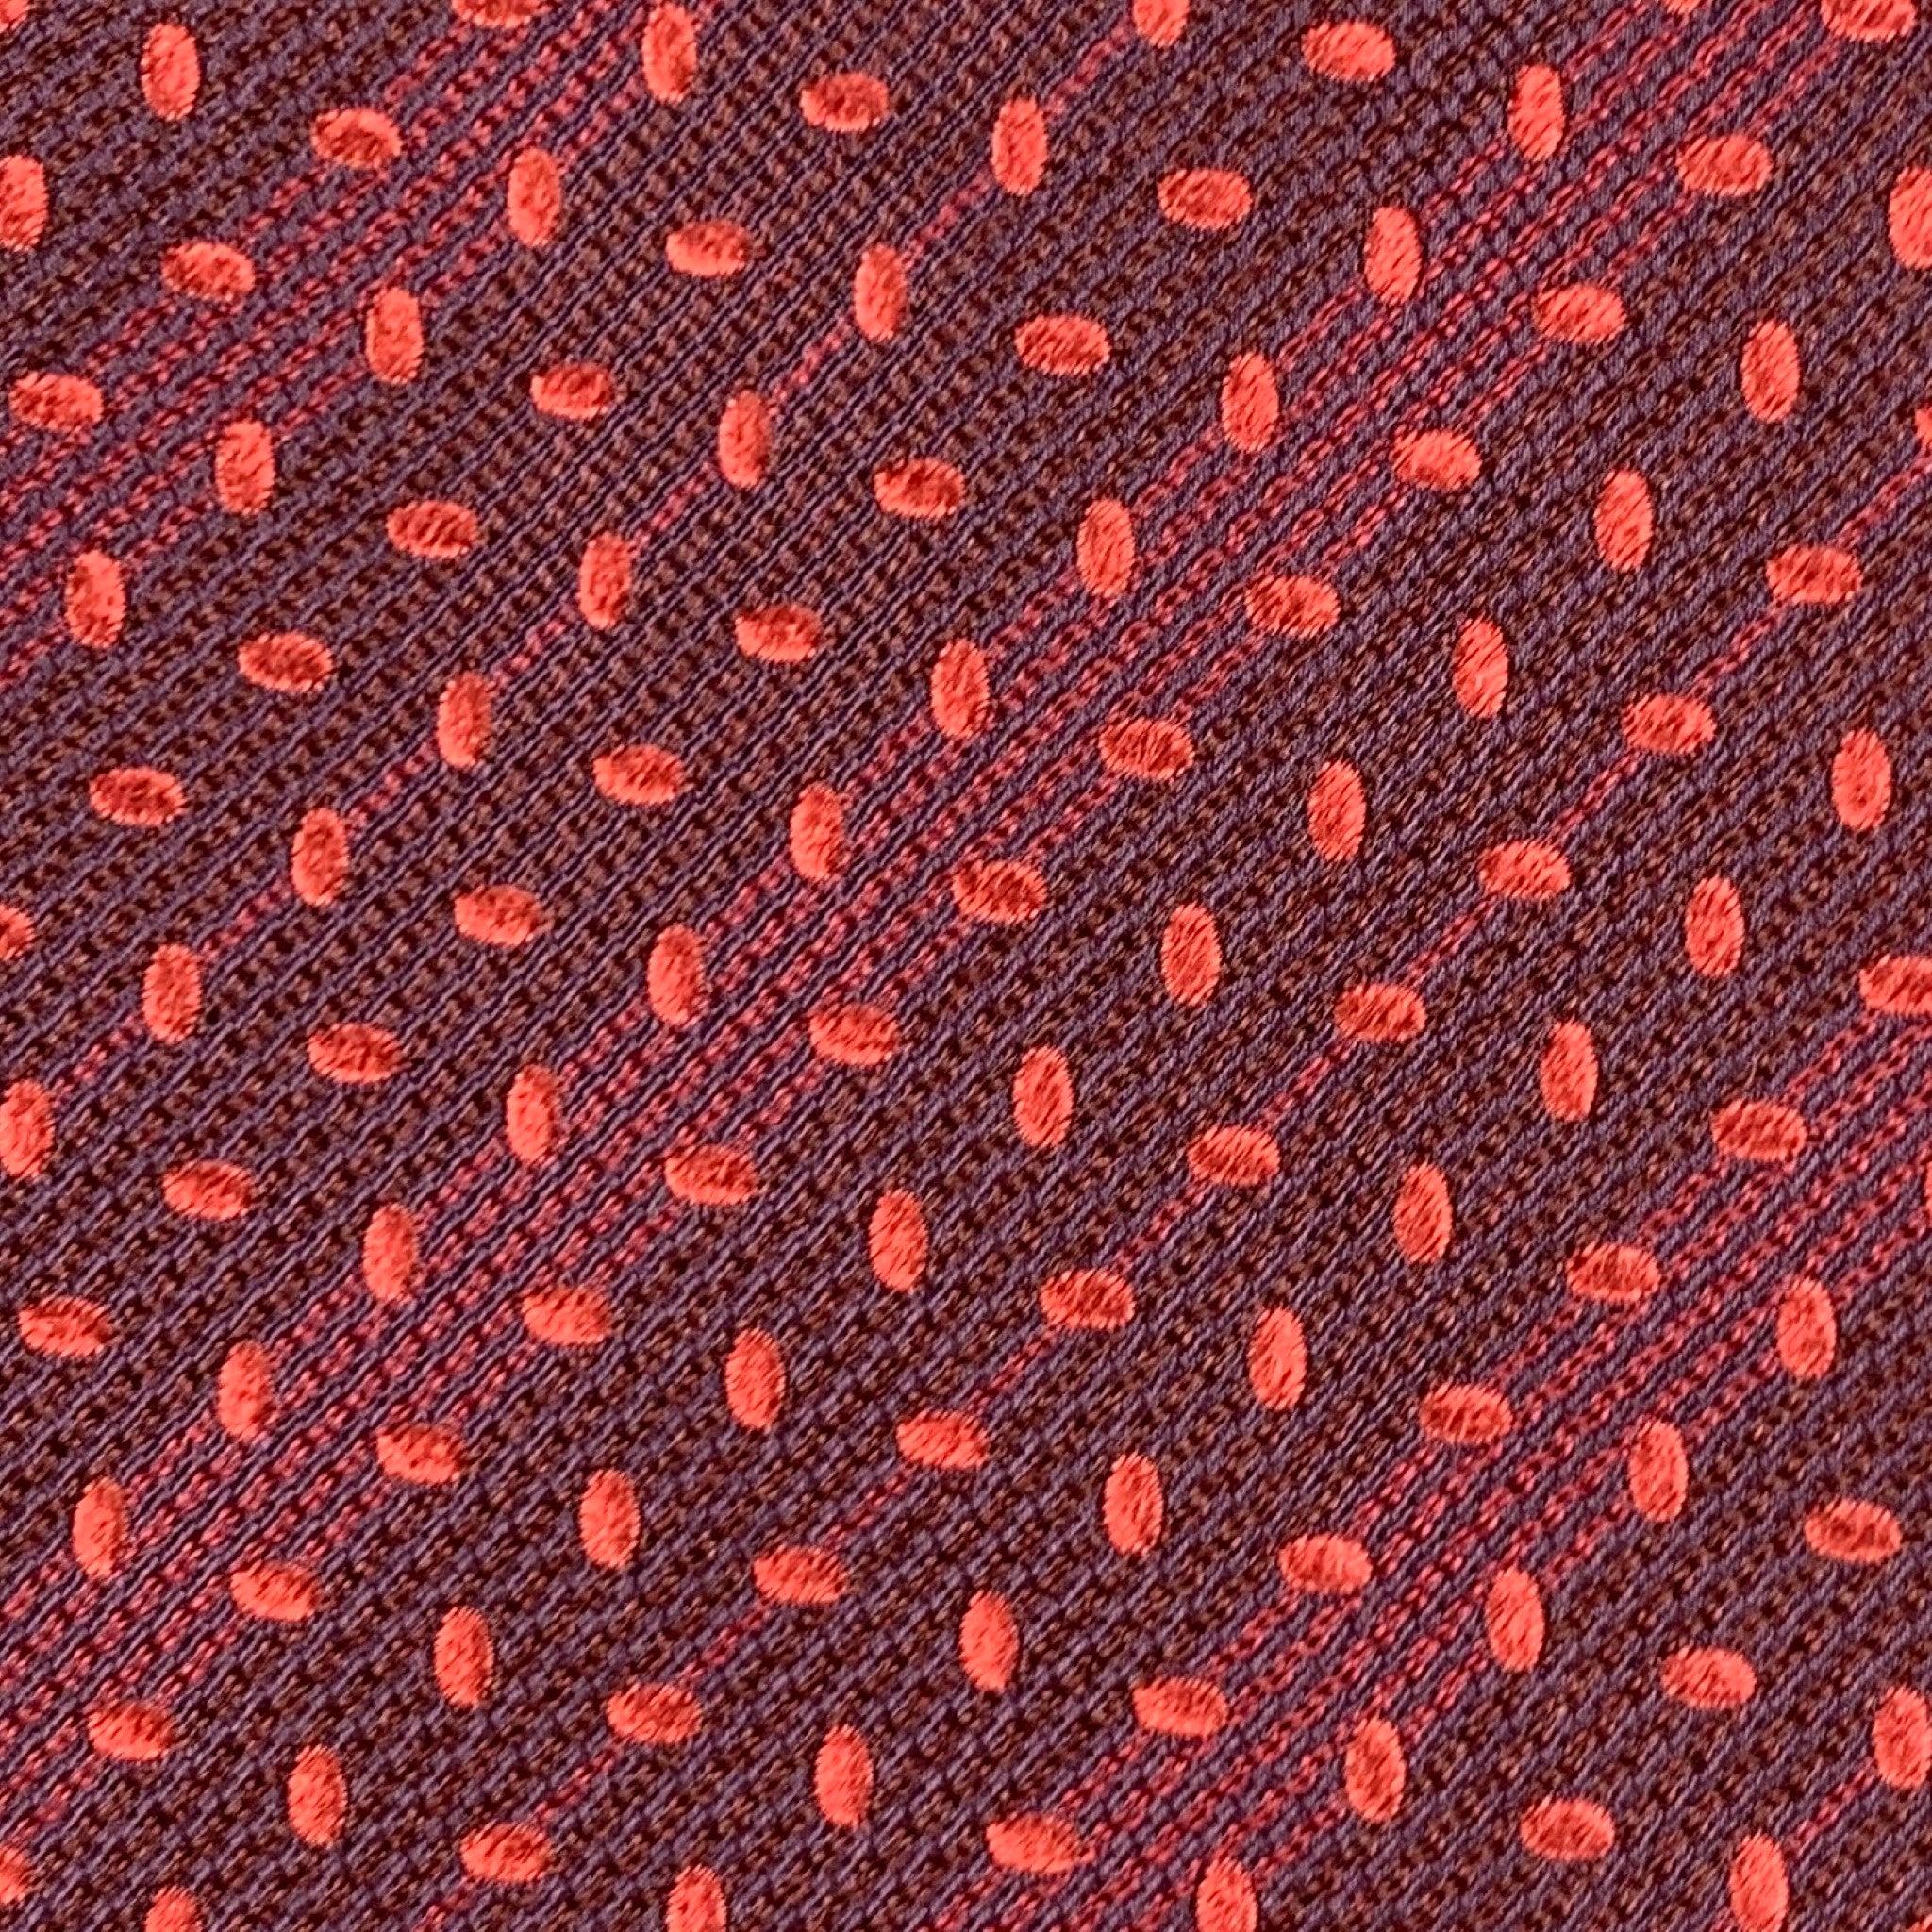 GIORGIO ARMANI Burgundy Red Dots Silk Tie In Good Condition For Sale In San Francisco, CA